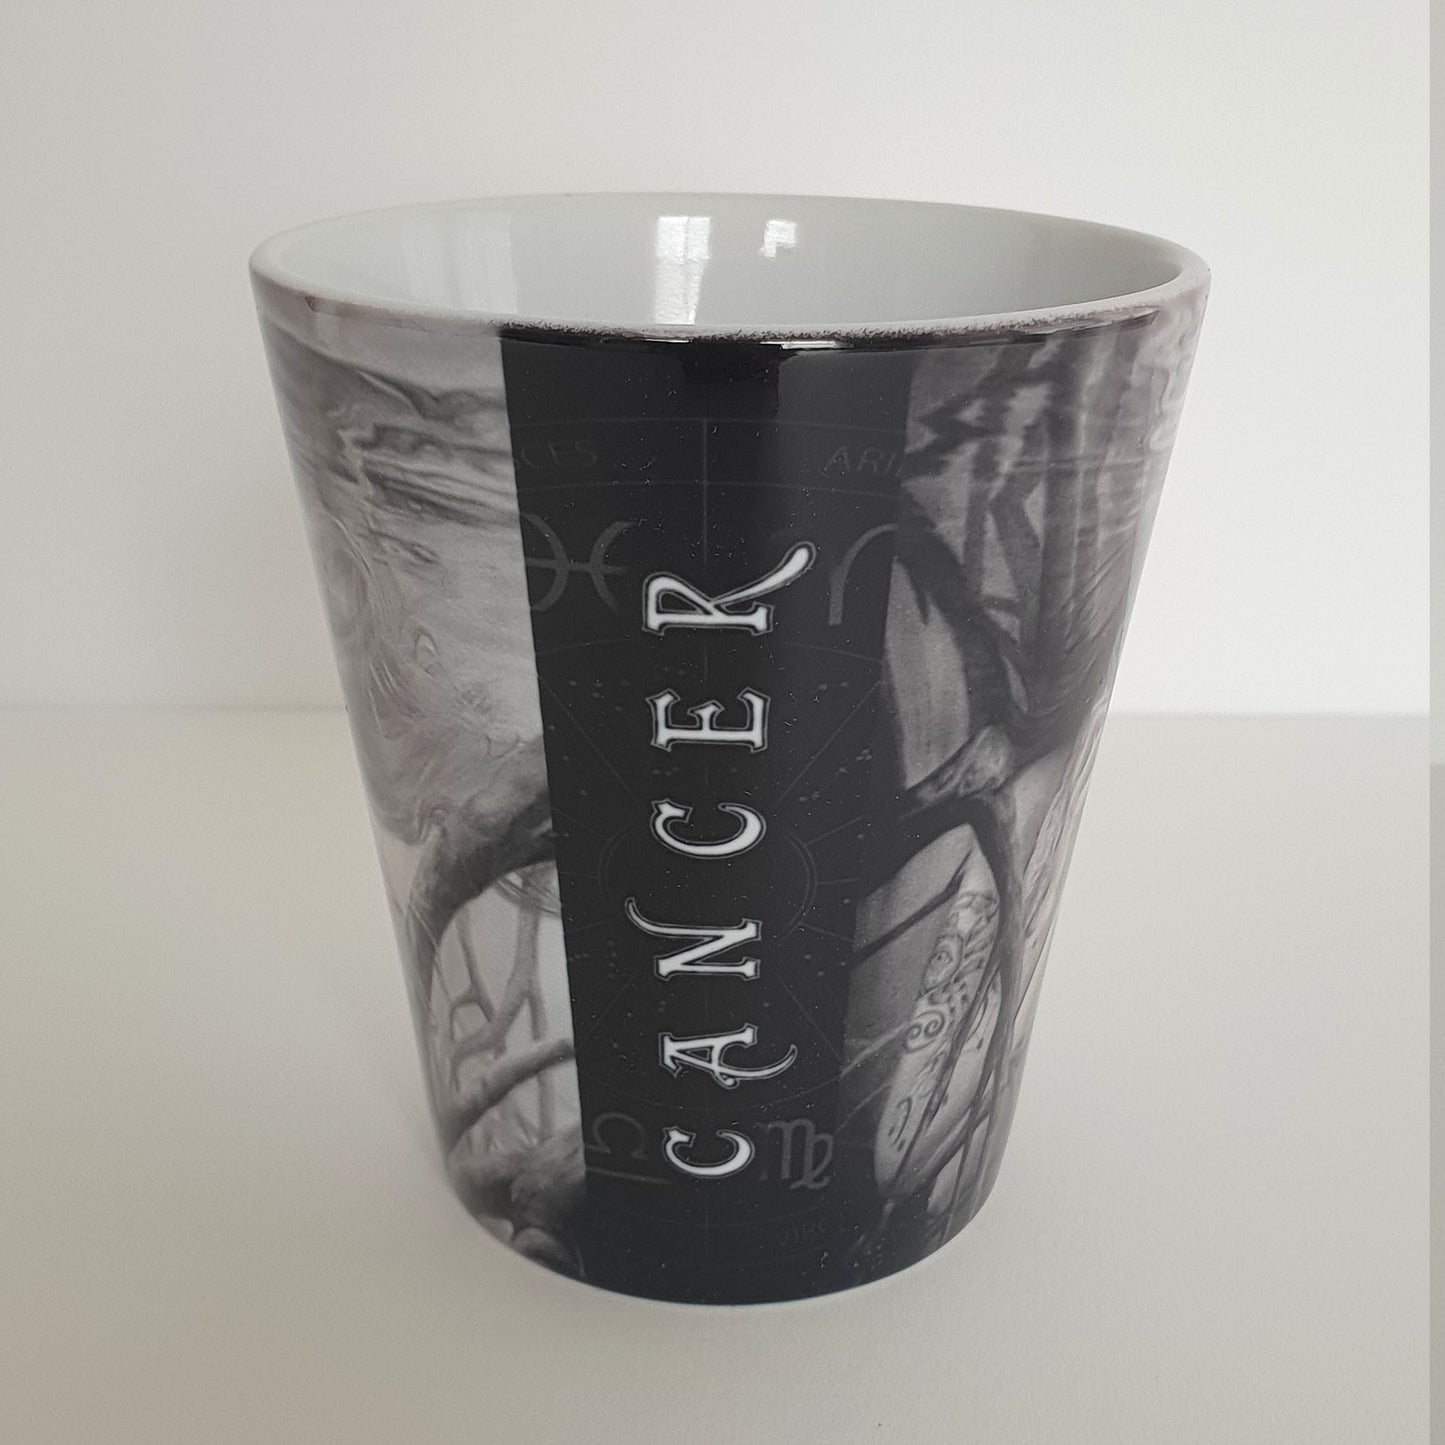 'Cancer' ceramic mug